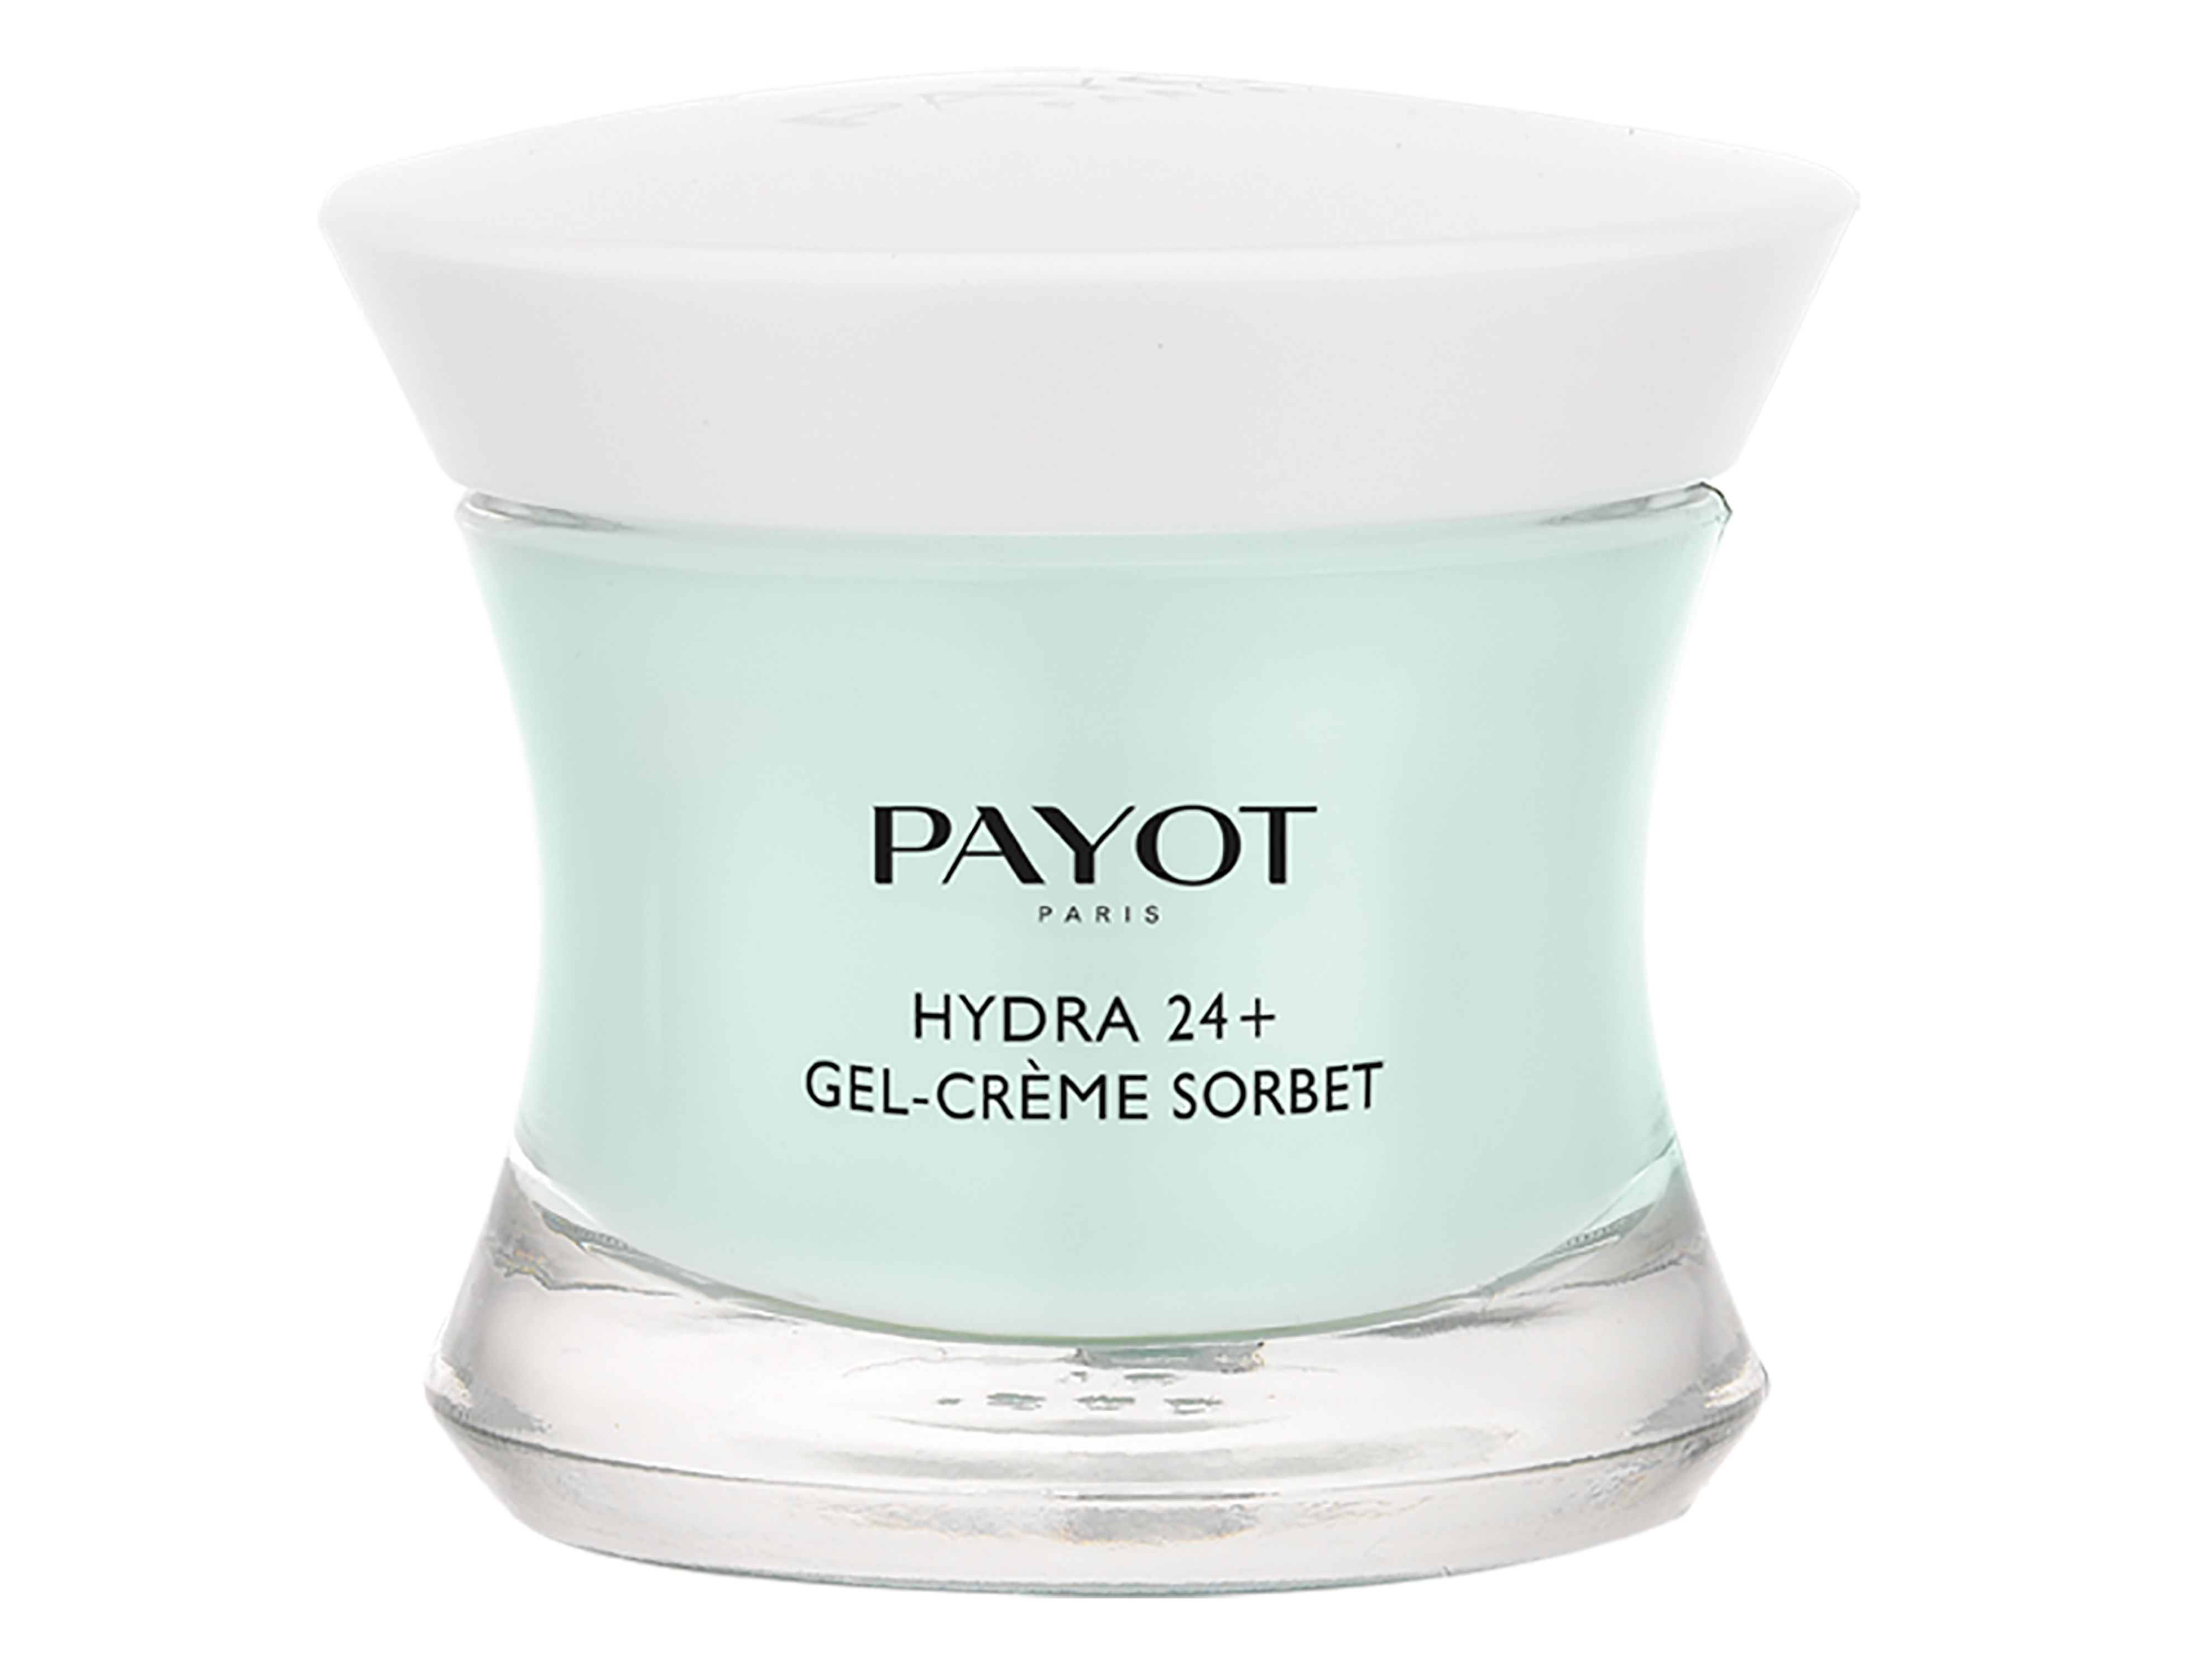 Payot Payot Hydra 24+ Gel-Creme Sorbet, 50